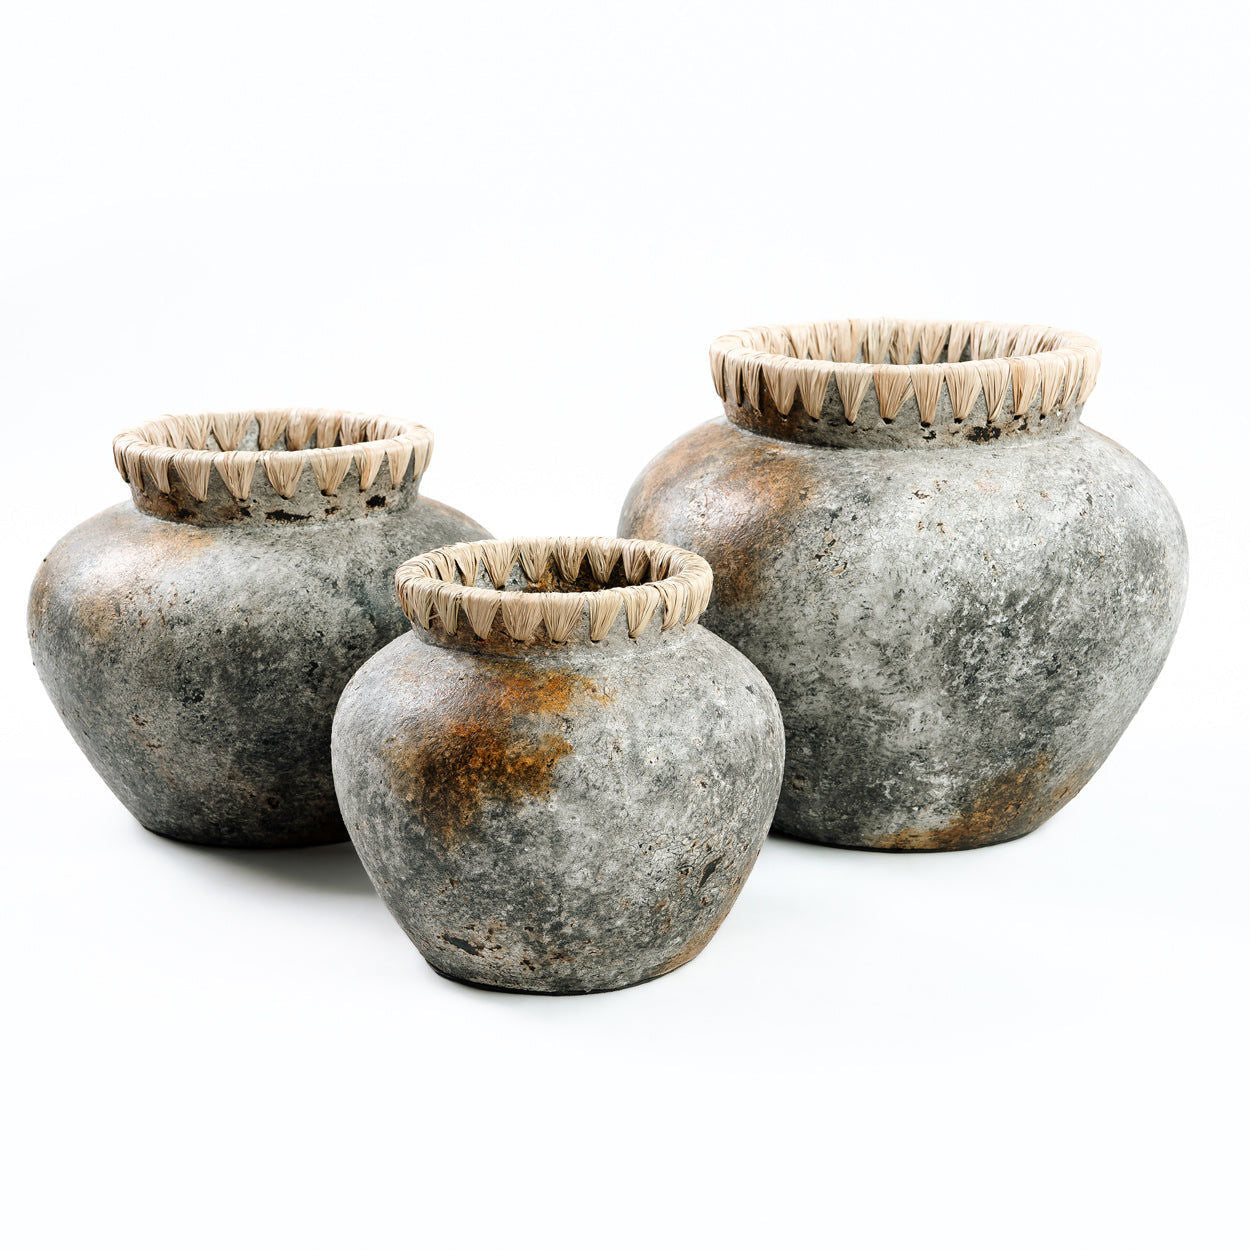 Vase antique gris - The Styly - M - maison bloom concept